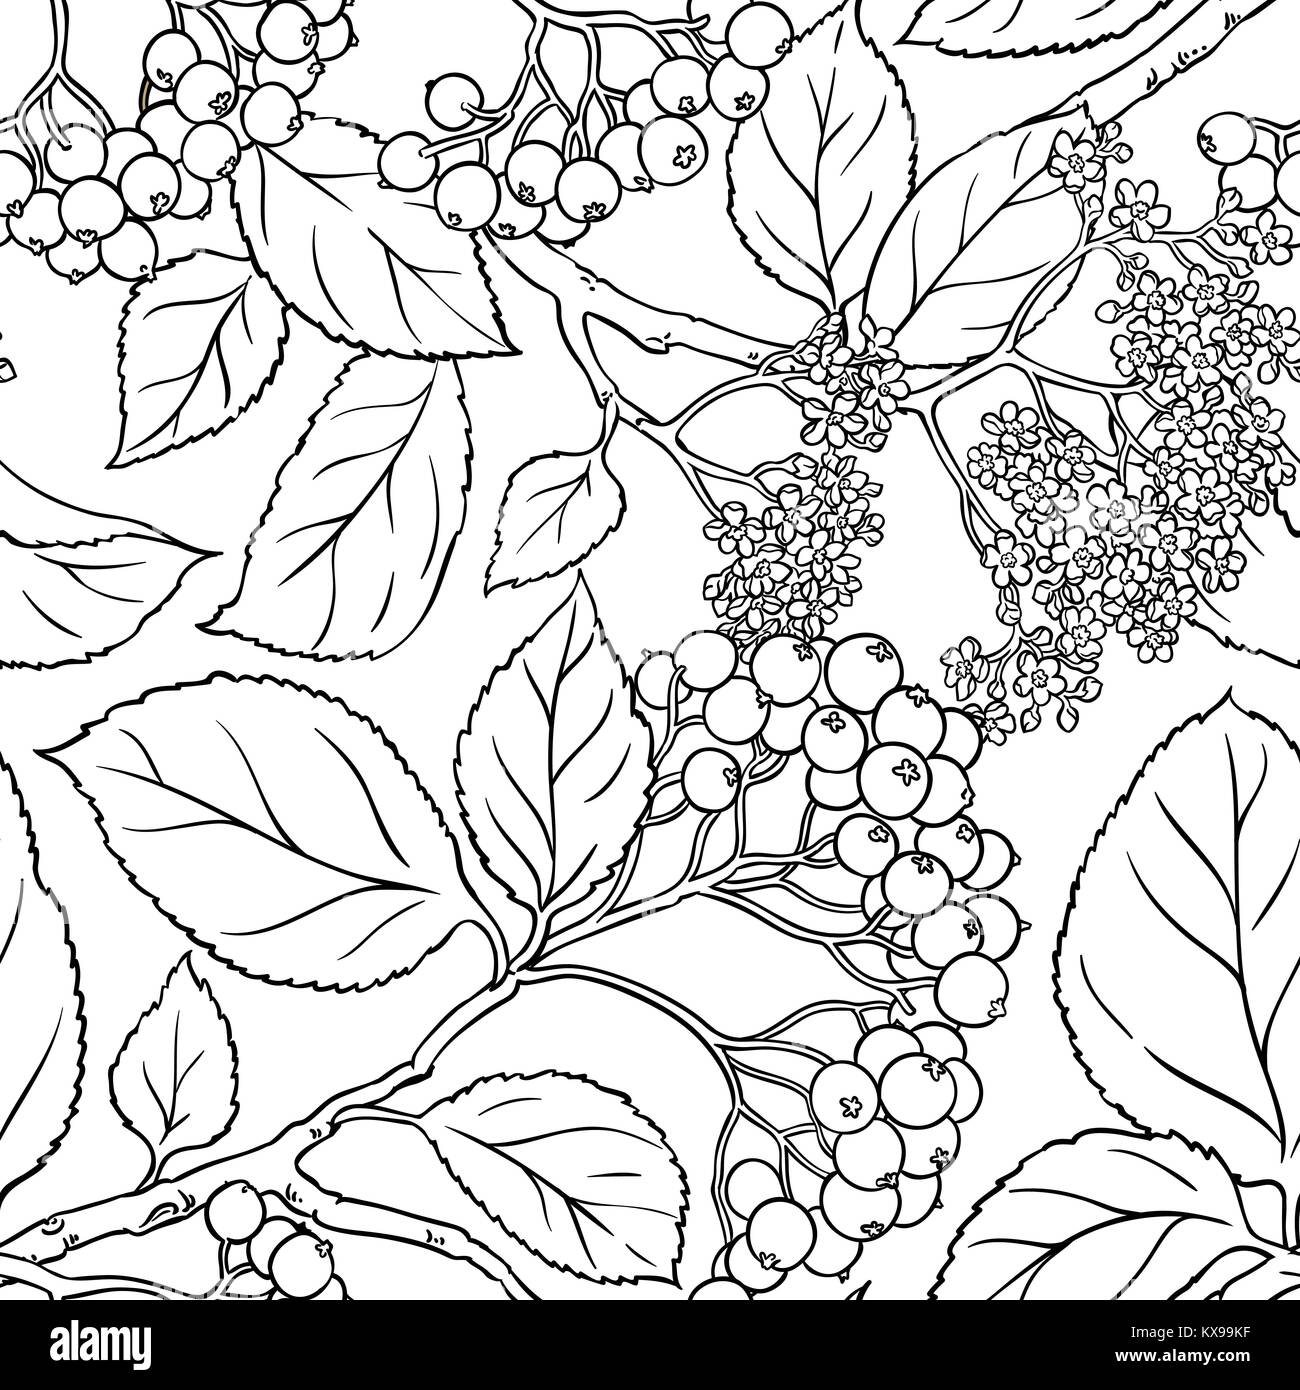 Rowan leaf Black and White Stock Photos & Images - Alamy